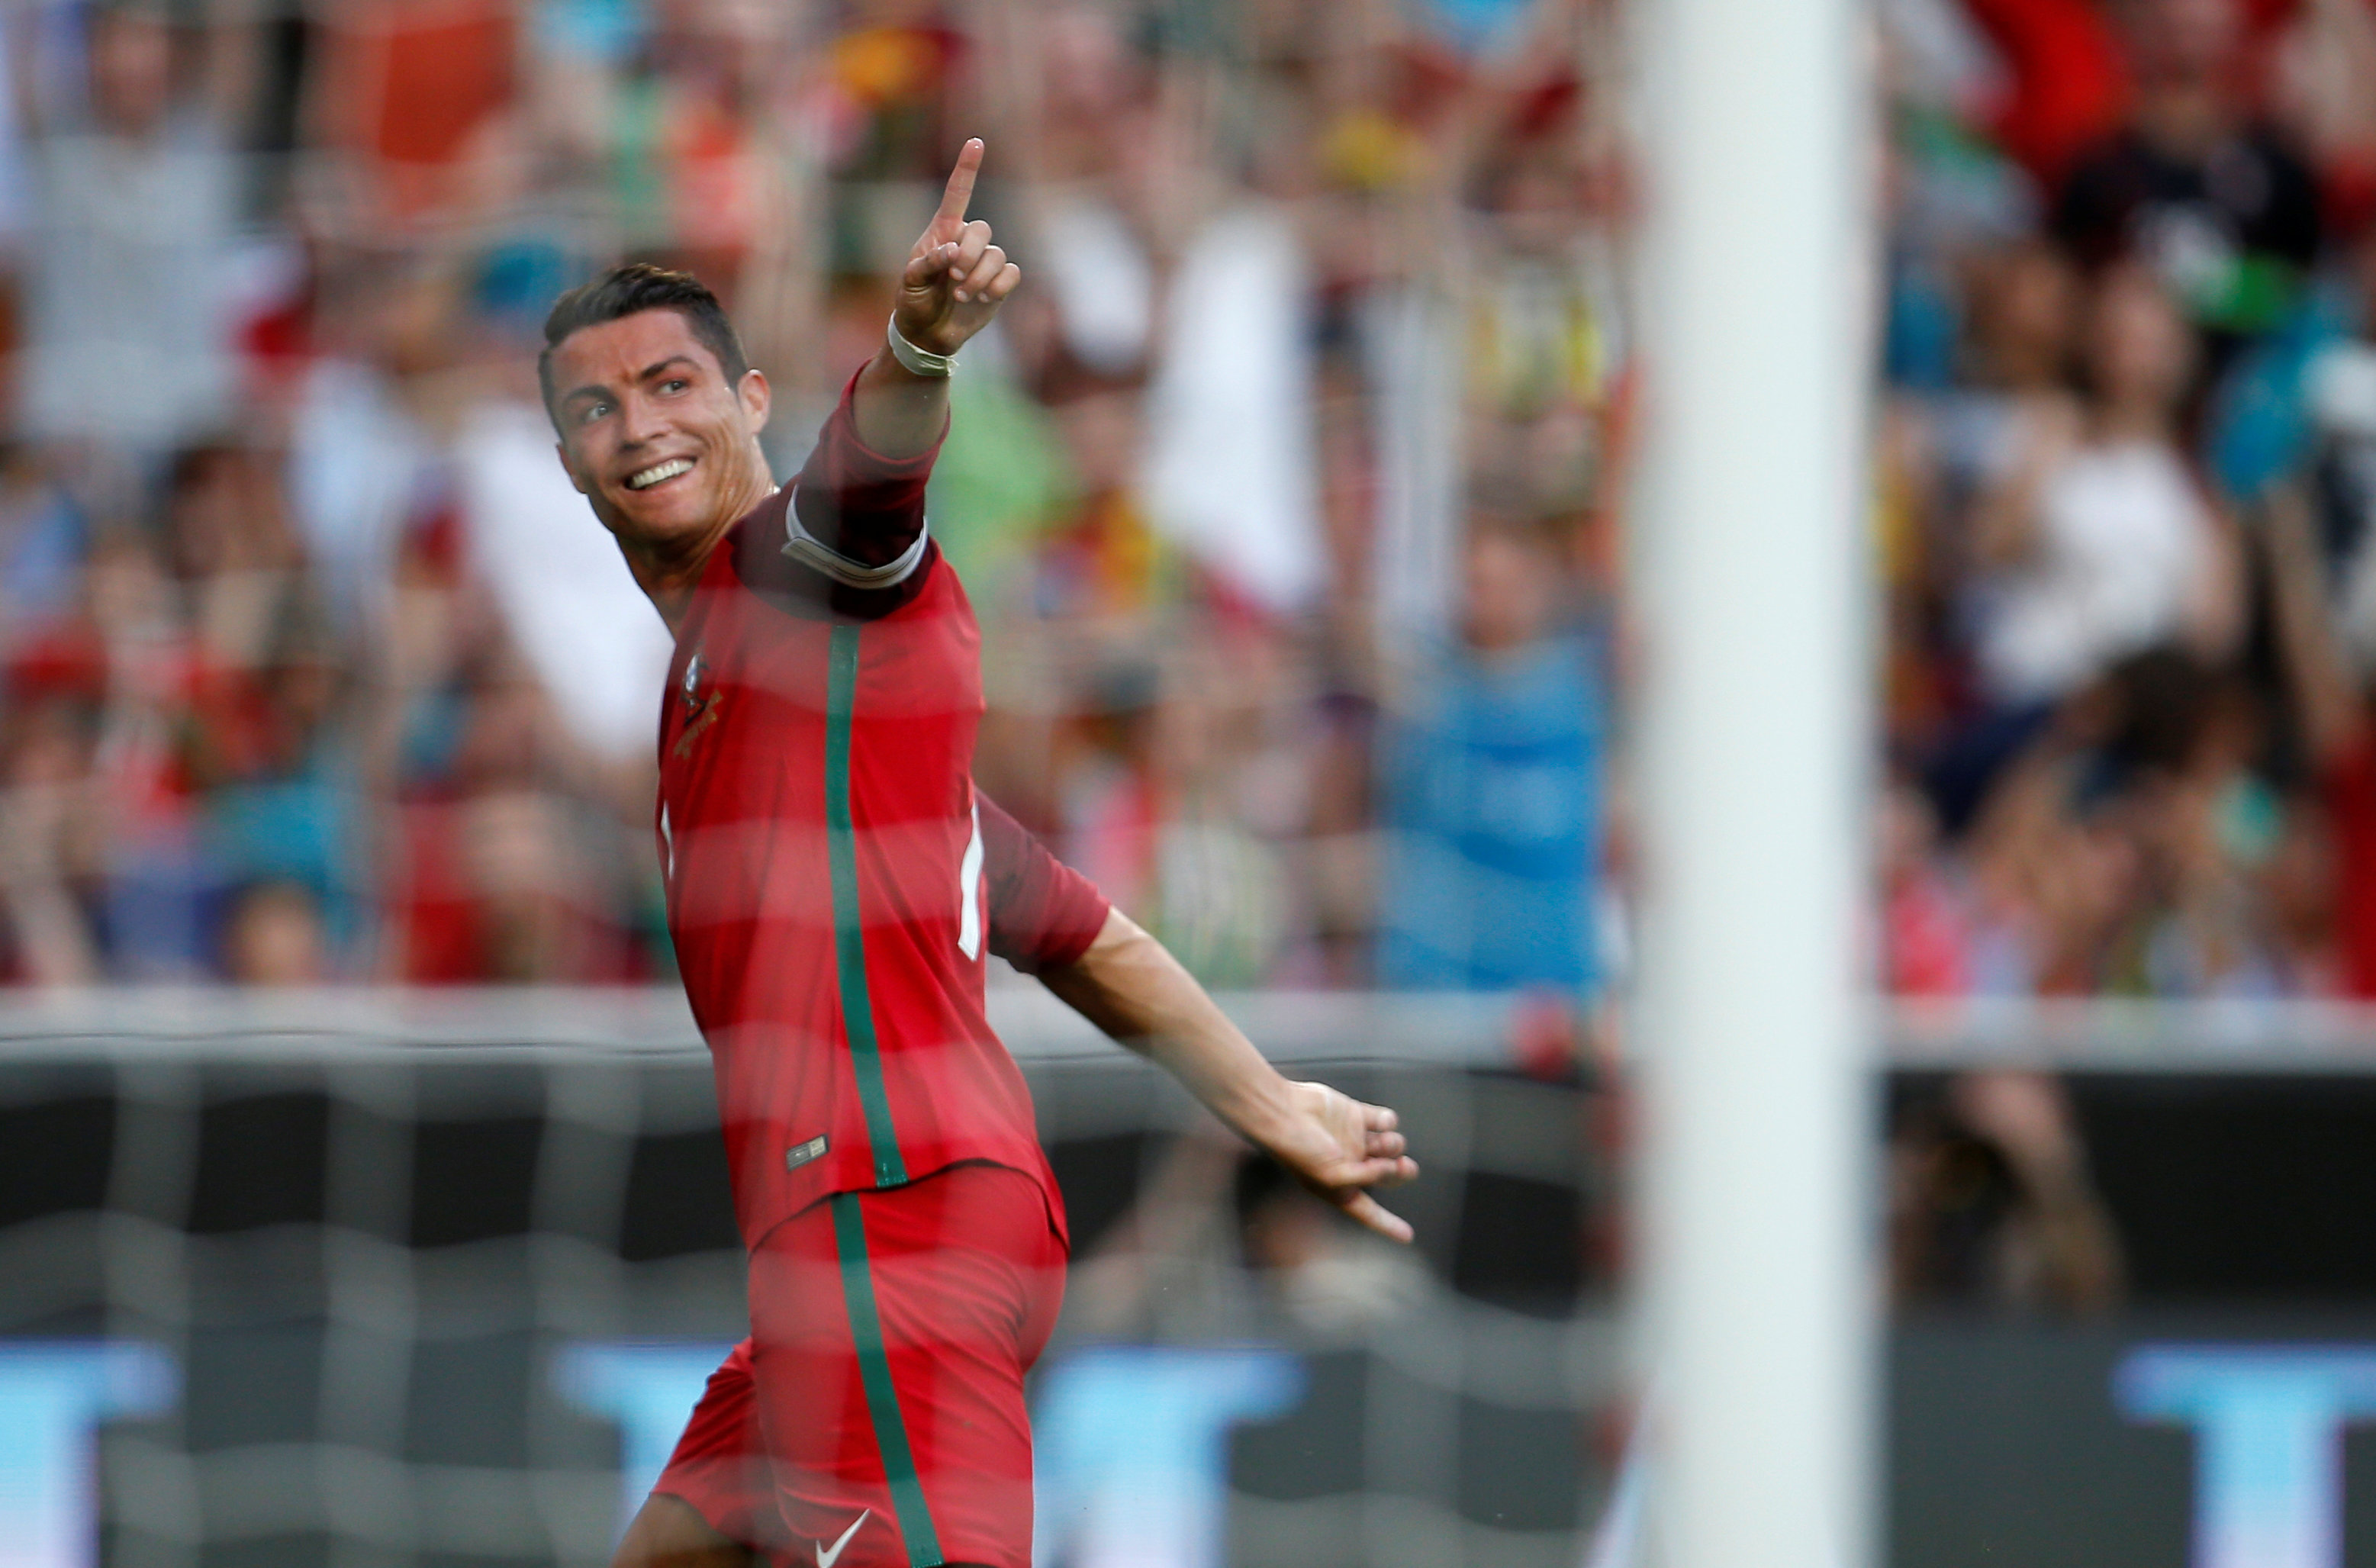 Football: Sparkling Quaresma upstages two-goal Ronaldo in Estonia rout